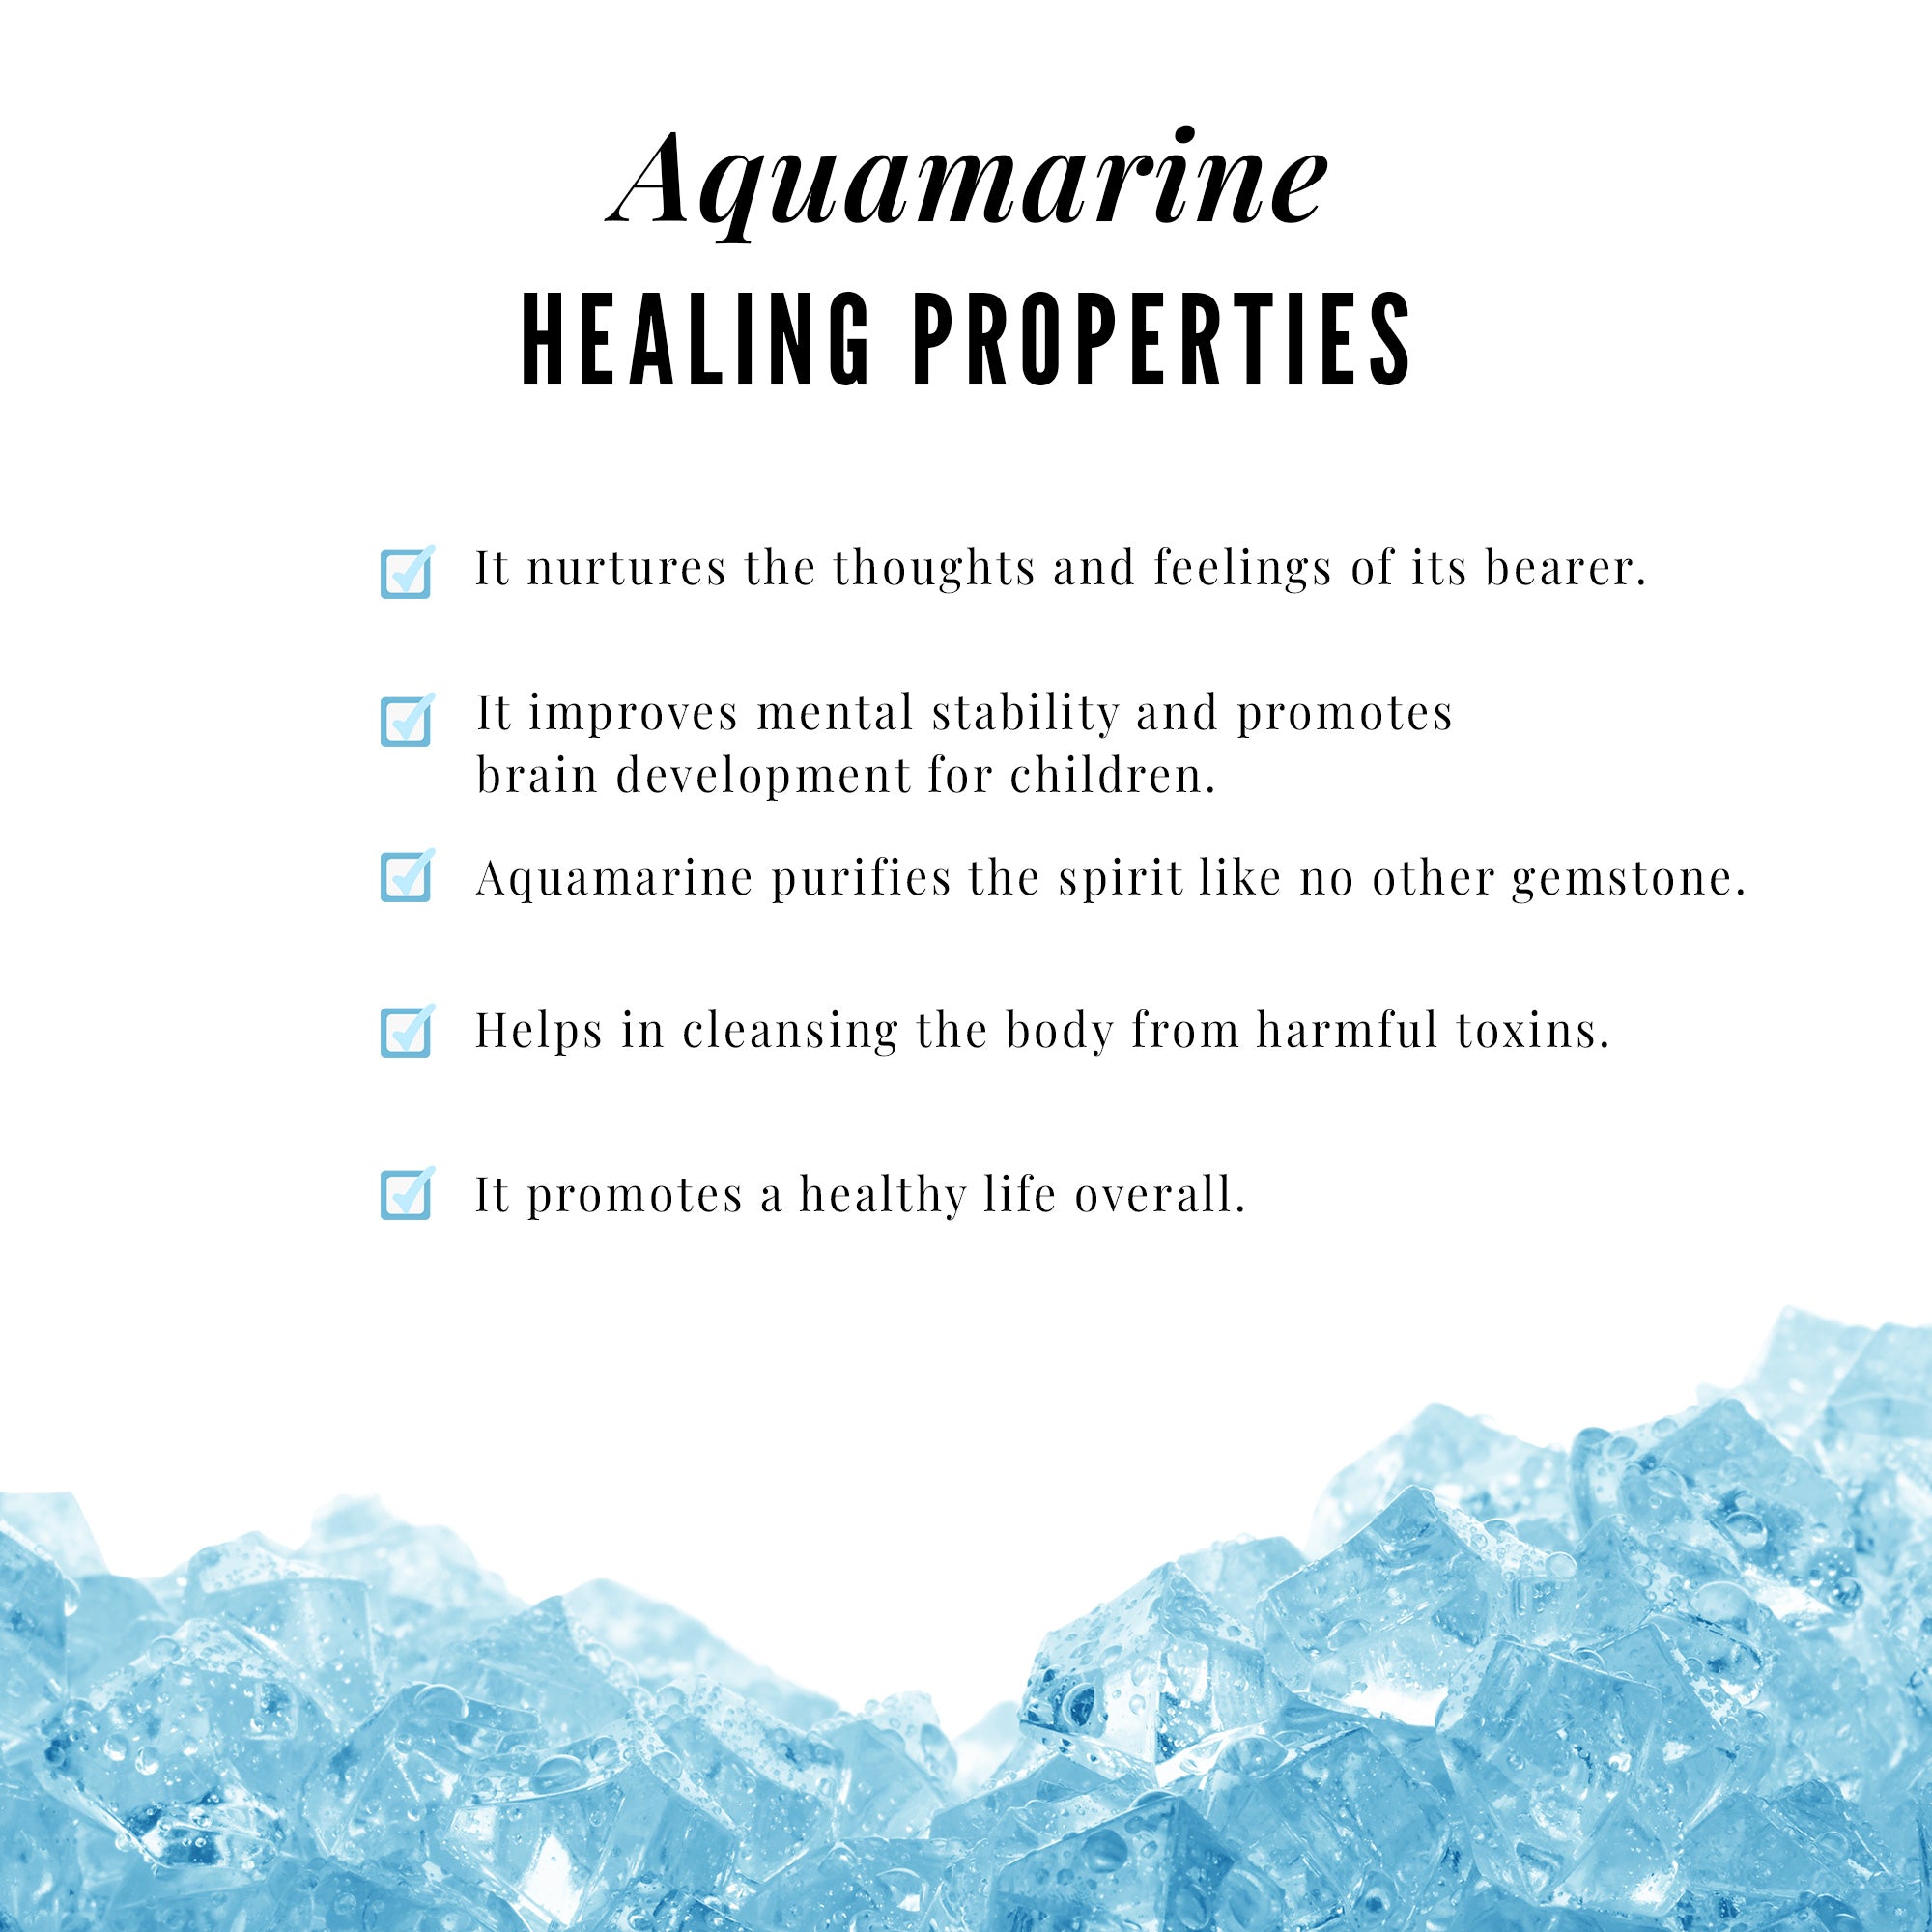 Minimal Half Eternity Ring with Aquamarine and Diamond Aquamarine - ( AAA ) - Quality - Rosec Jewels